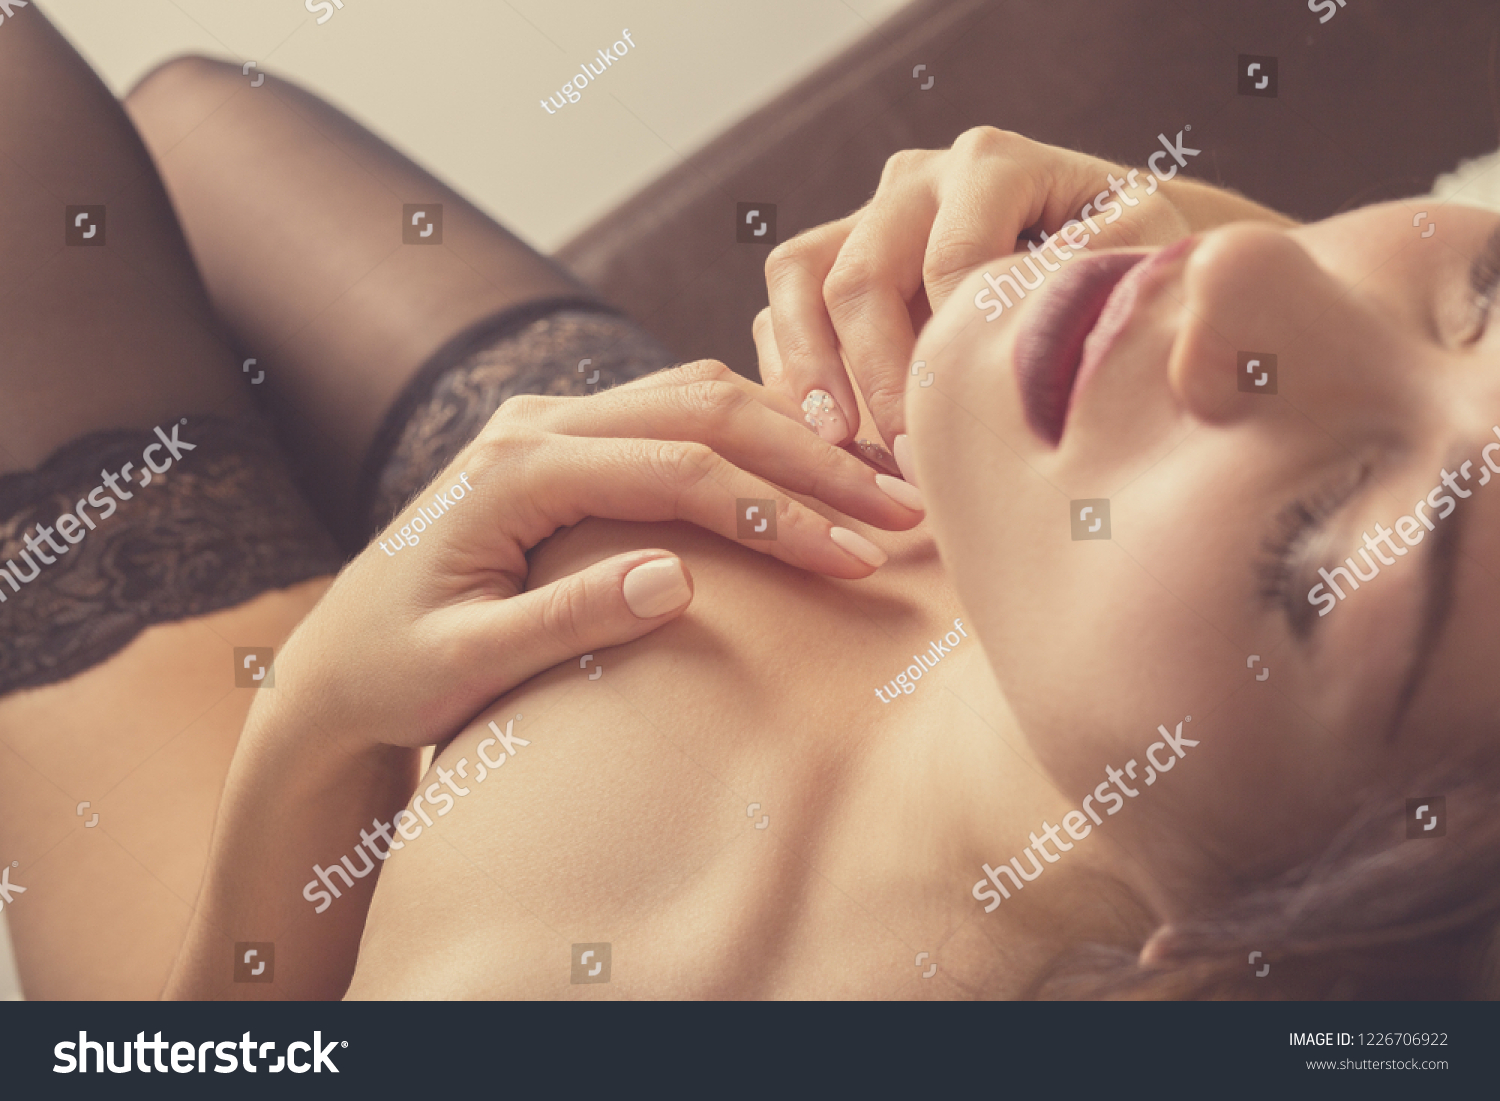 Sensual Aroused Nude Woman Lying On Stock Photo 1216634212 Shutterstock